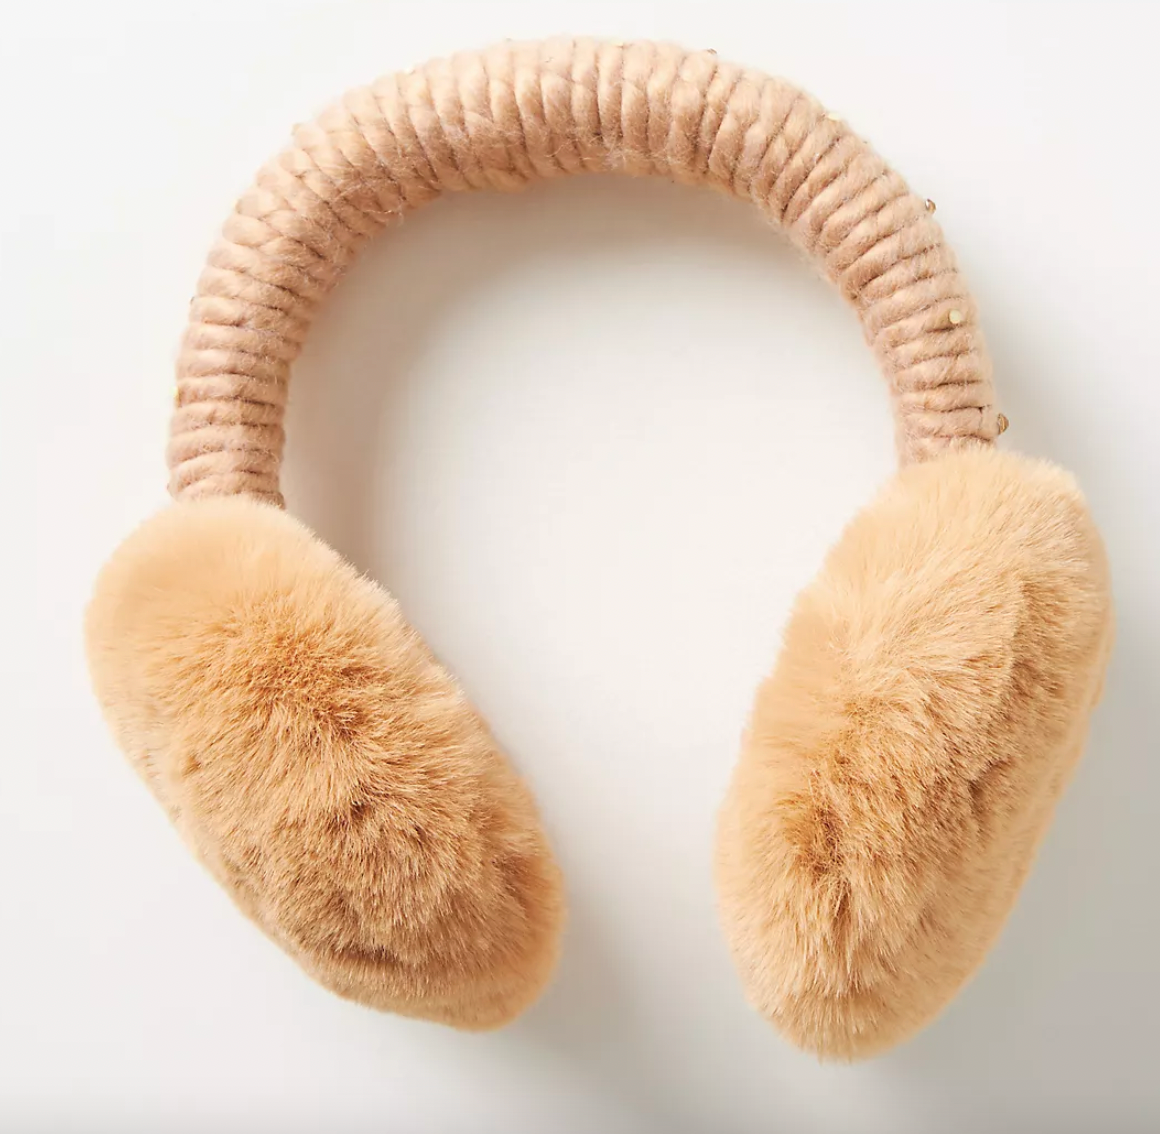 Anthropologie Chunky Knit Embellished Faux Fur Earmuffs